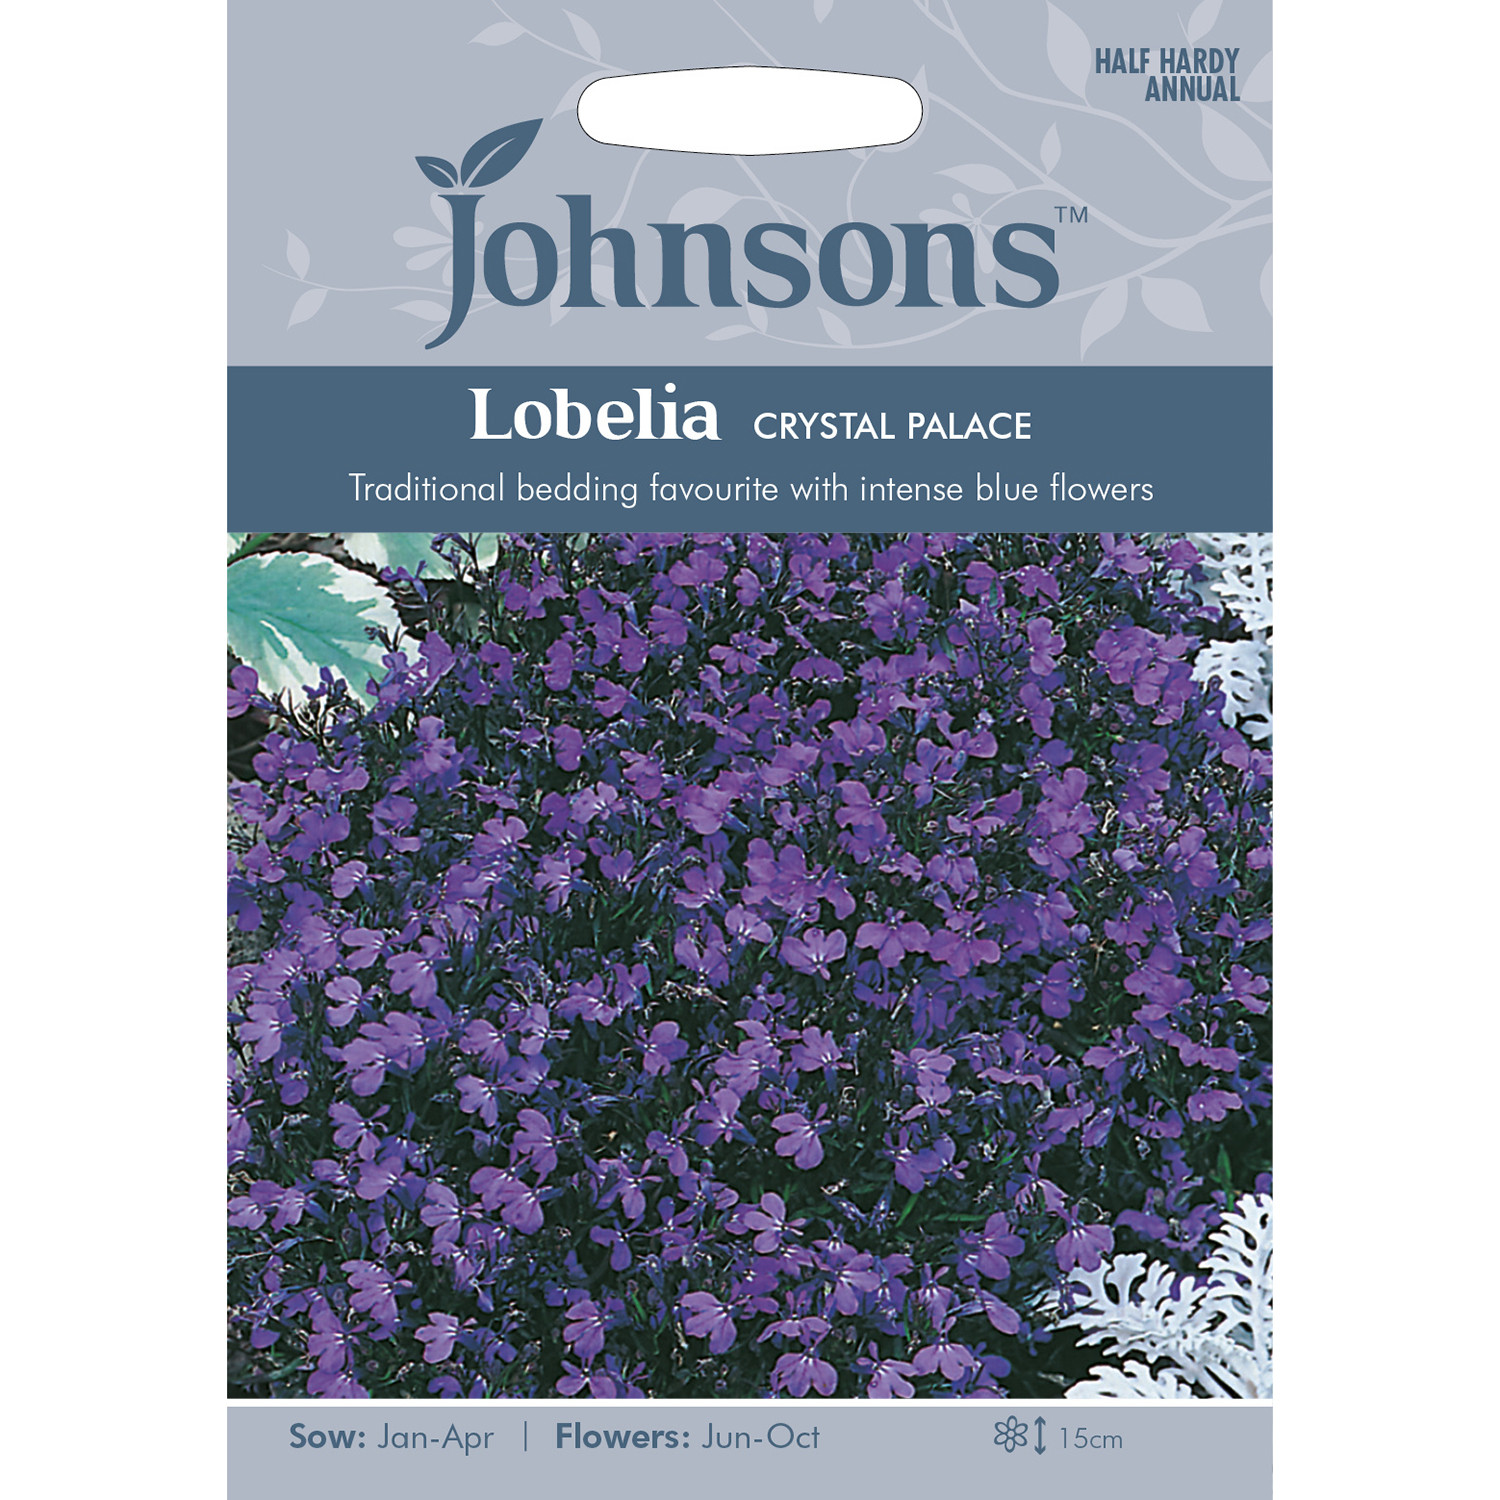 Johnsons Lobelia Crystal Palace Flower Seeds Image 2